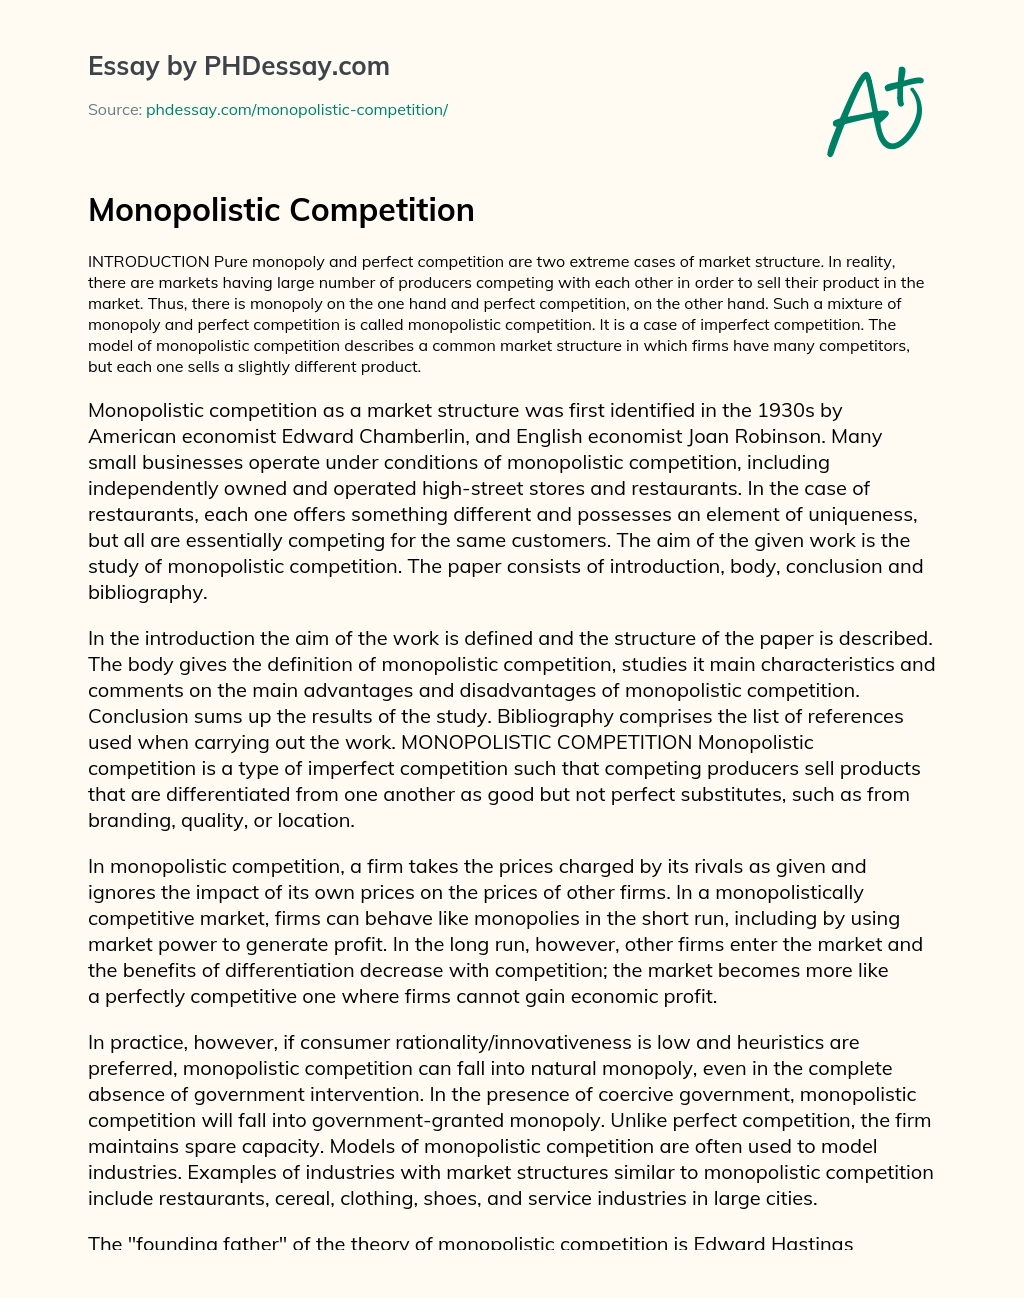 Monopolistic Competition essay